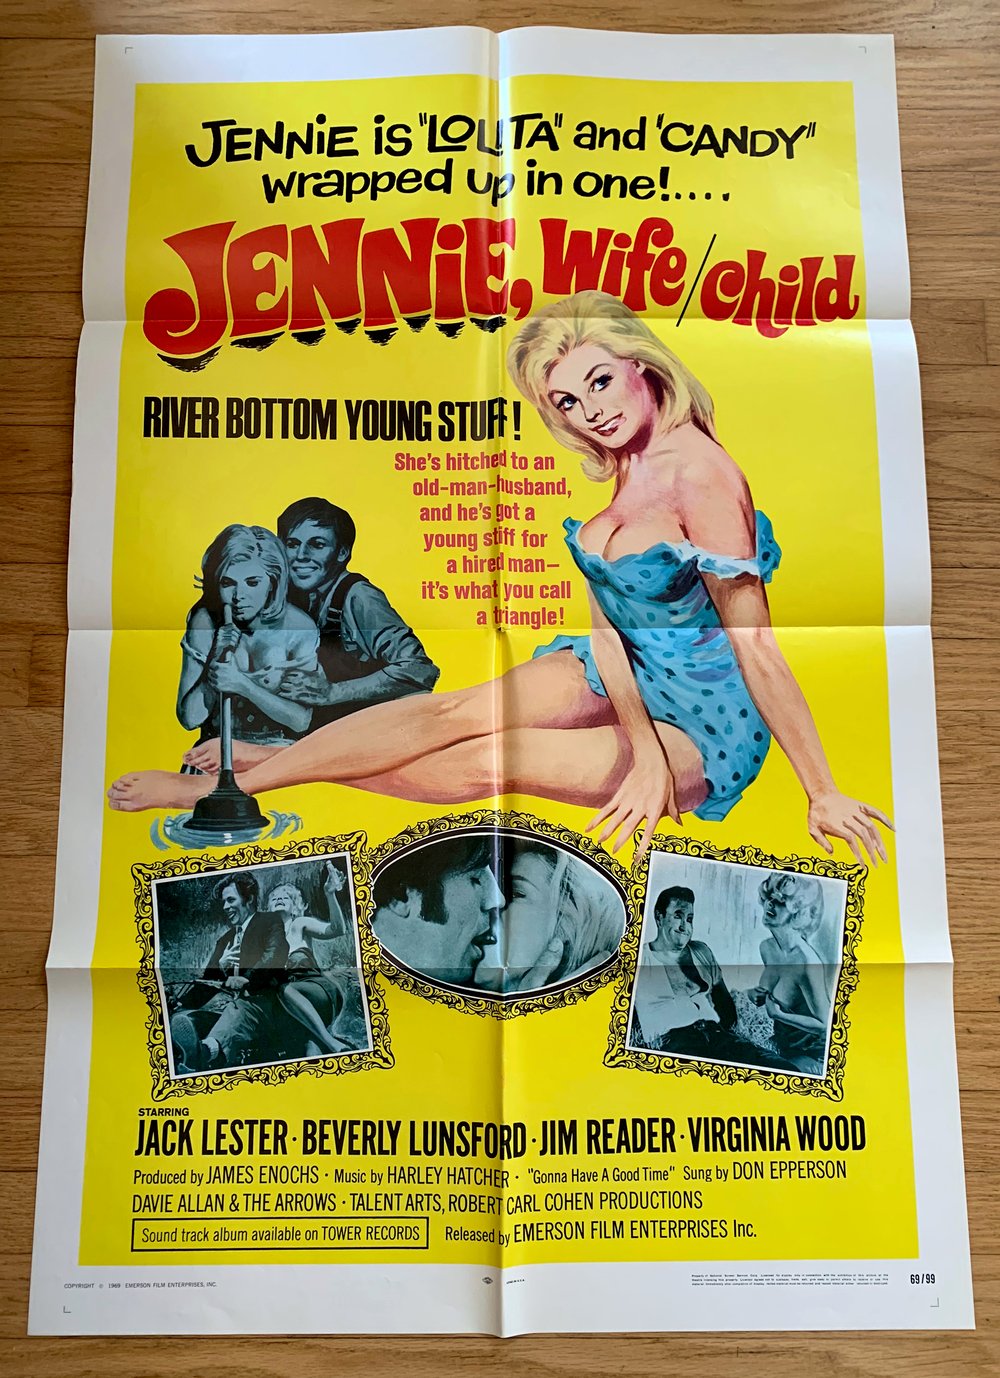 1969 JENNIE, WIFE/CHILD Original U.S. One Sheet Movie Poster